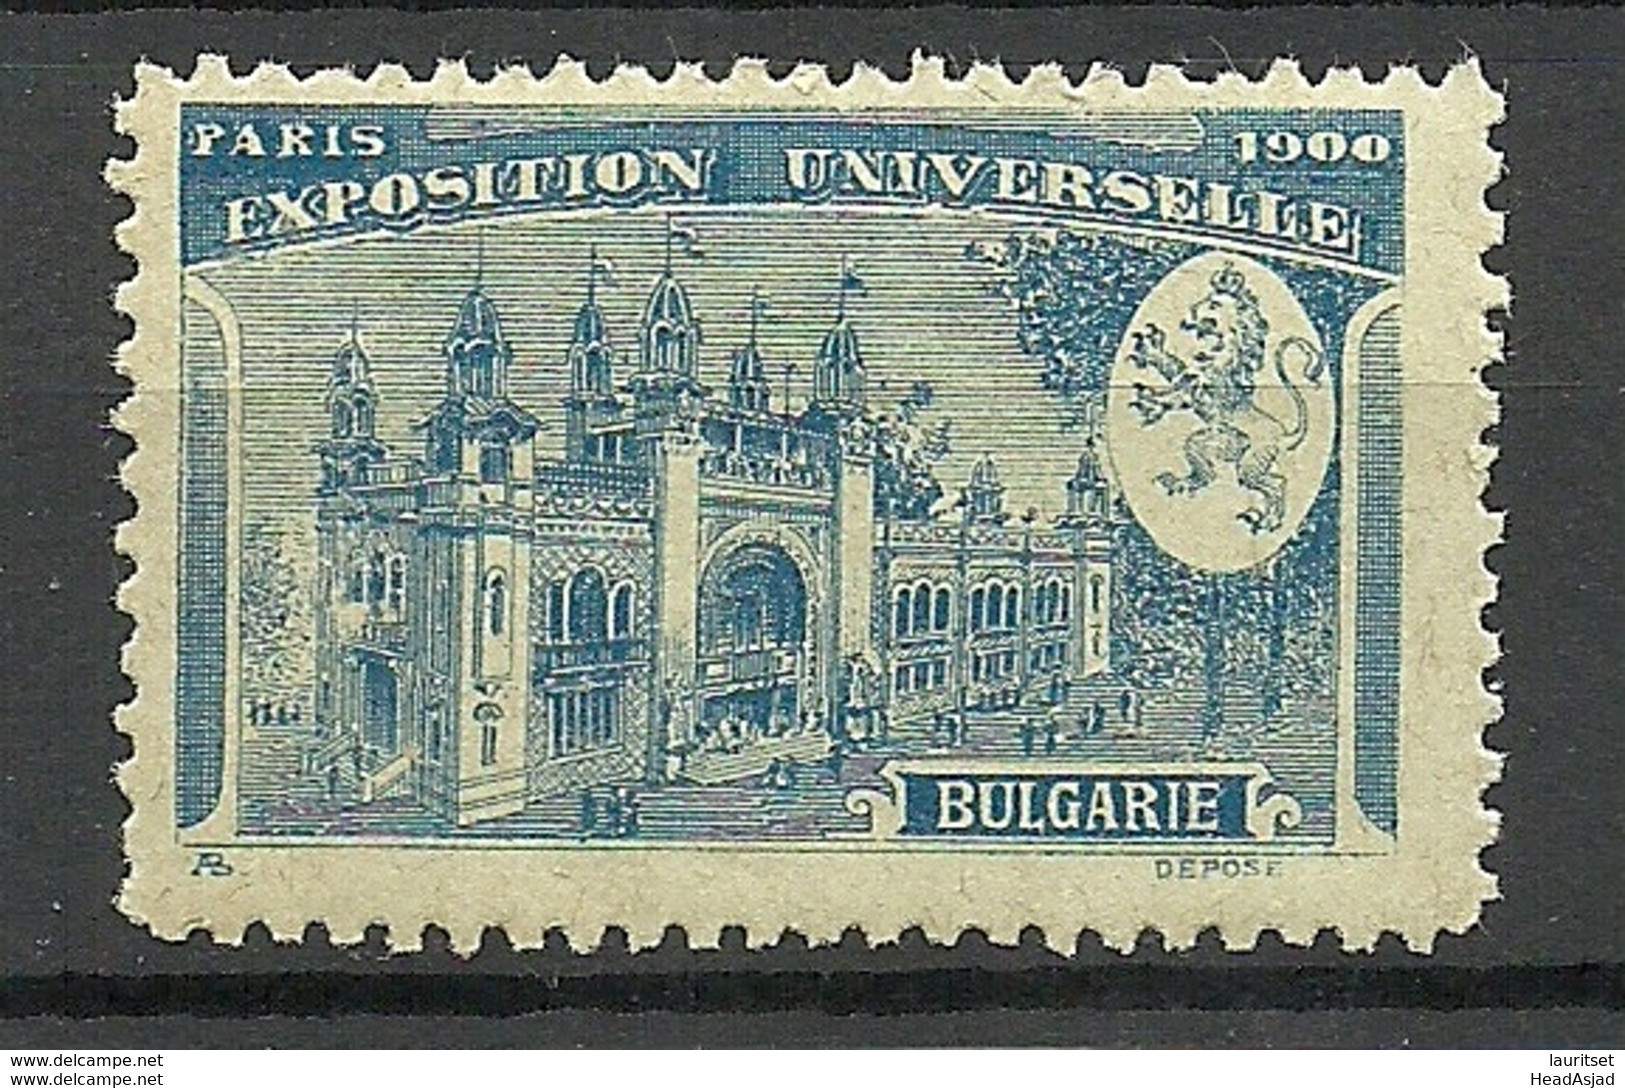 France 1900 EXPOSITION UNIVERSELLE Paris Bulgarie Bulgaria Pavillon MNH - 1900 – Parigi (Francia)